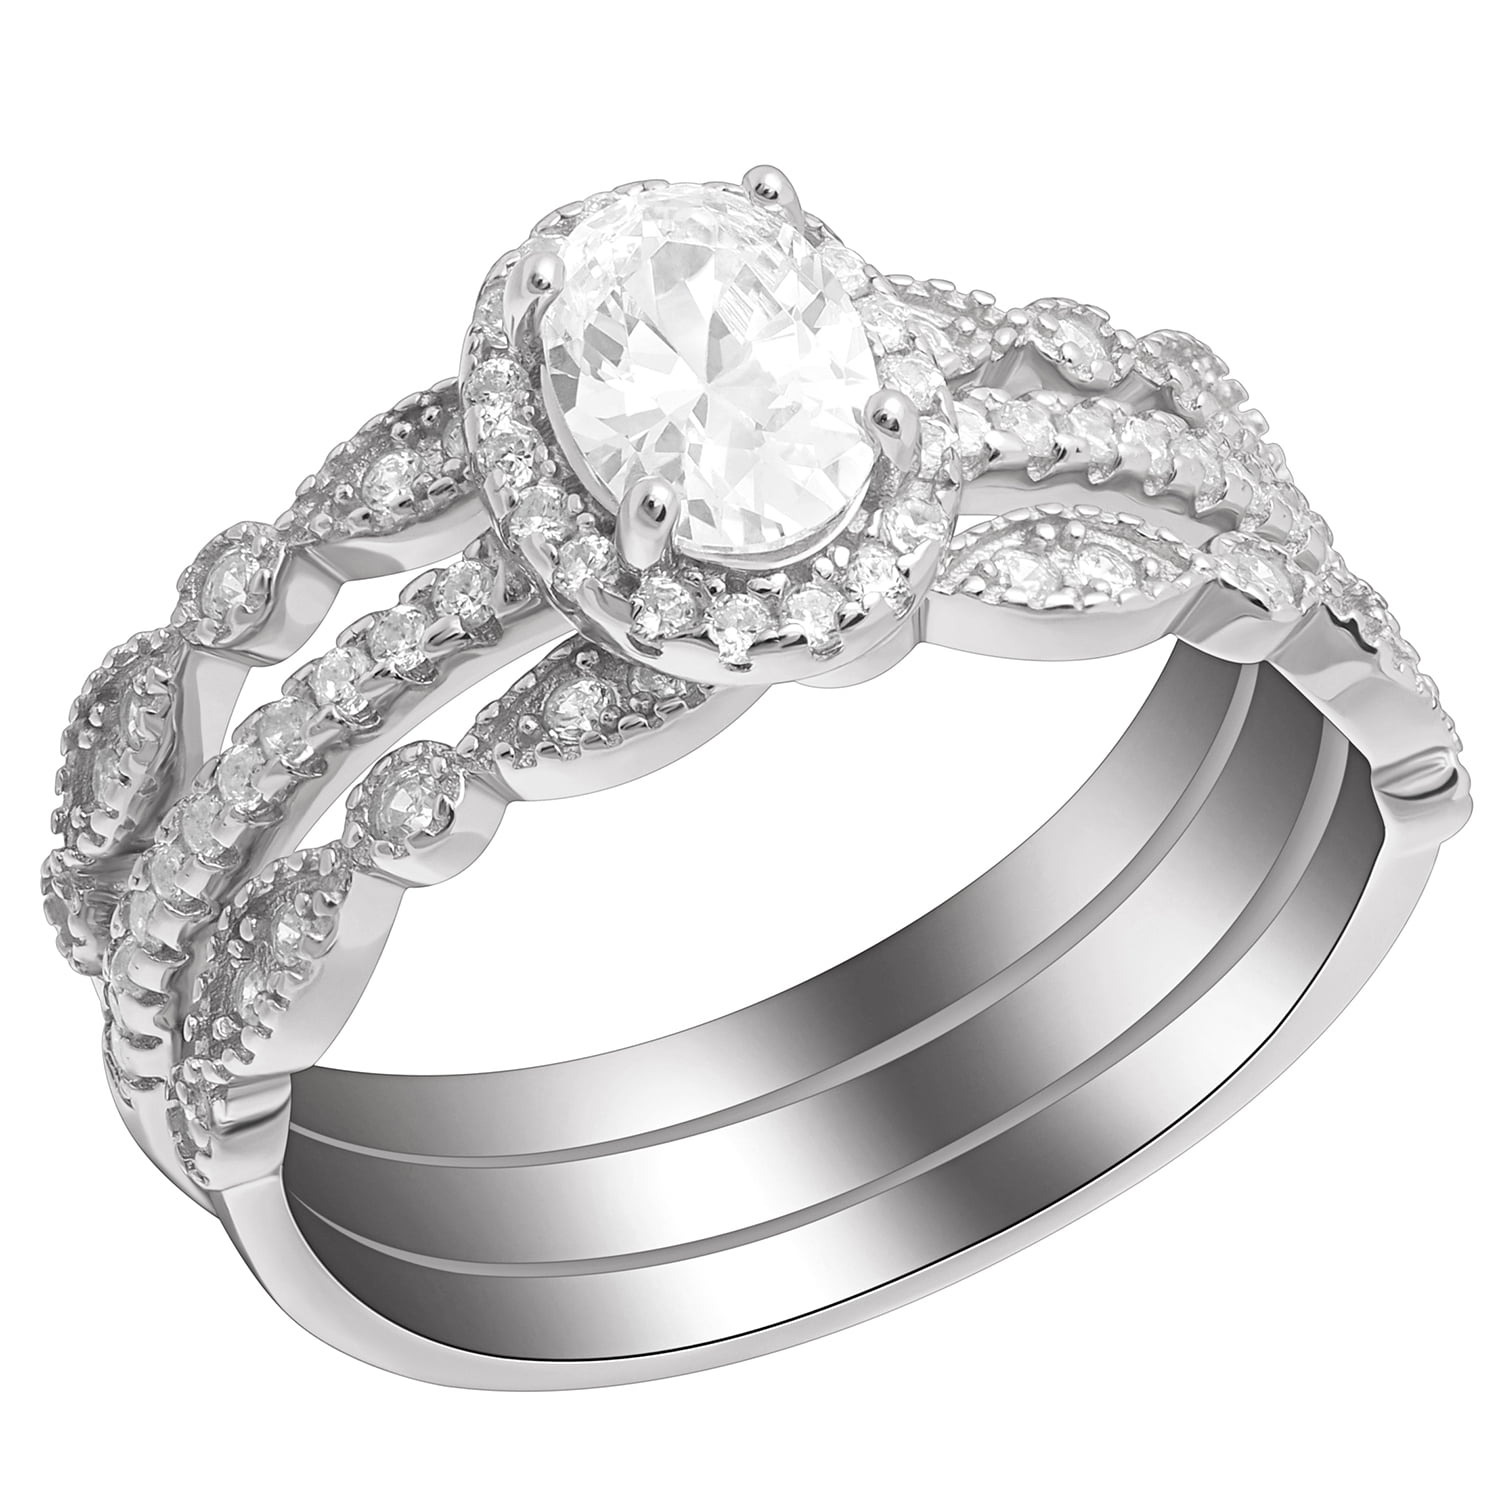 Amara Sterling Silver Oval CZ Bridal Wedding Ring Set Ginger Lyne Collection 